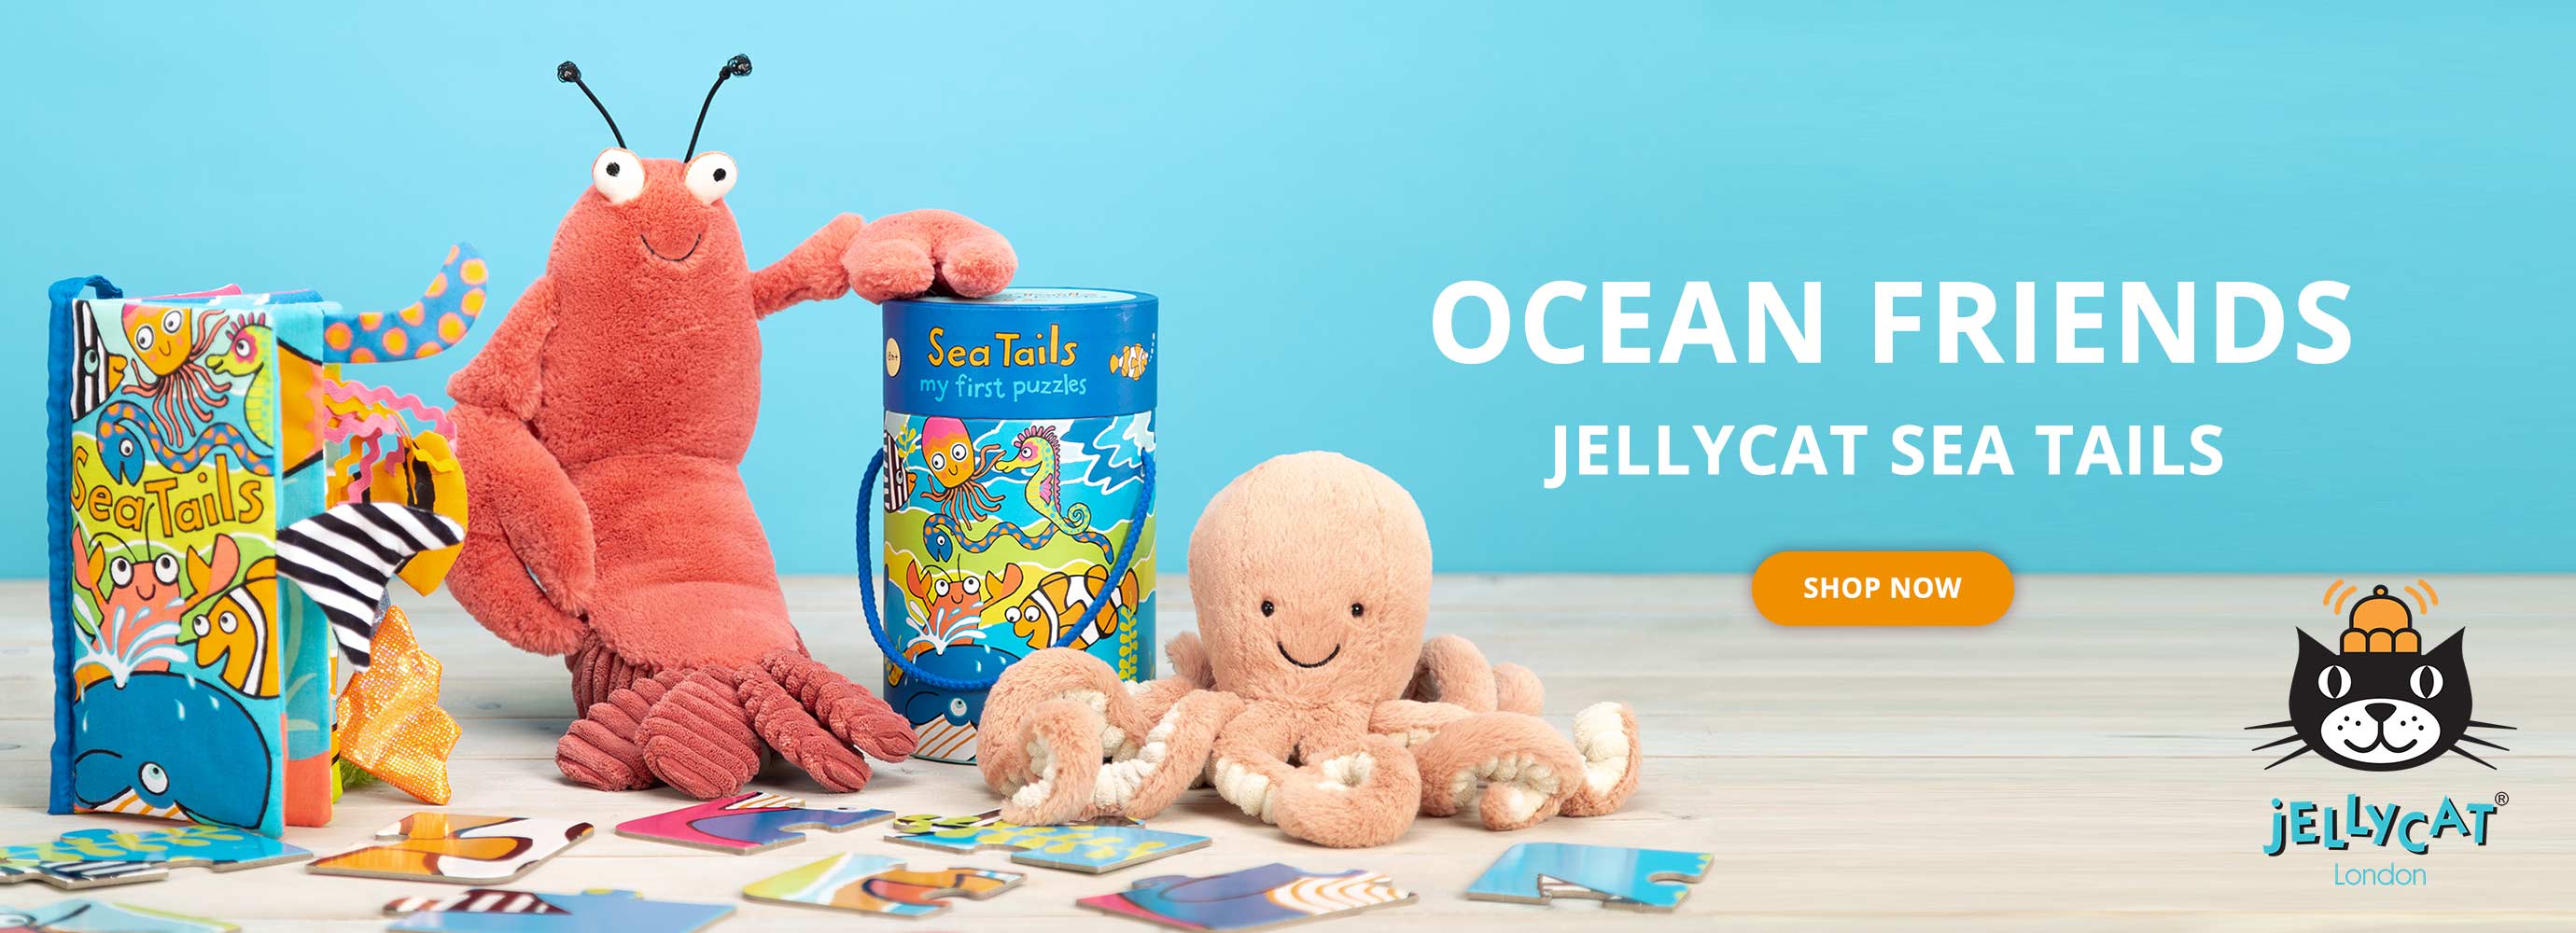 Jellycat and Little Jellycat Soft Toys 